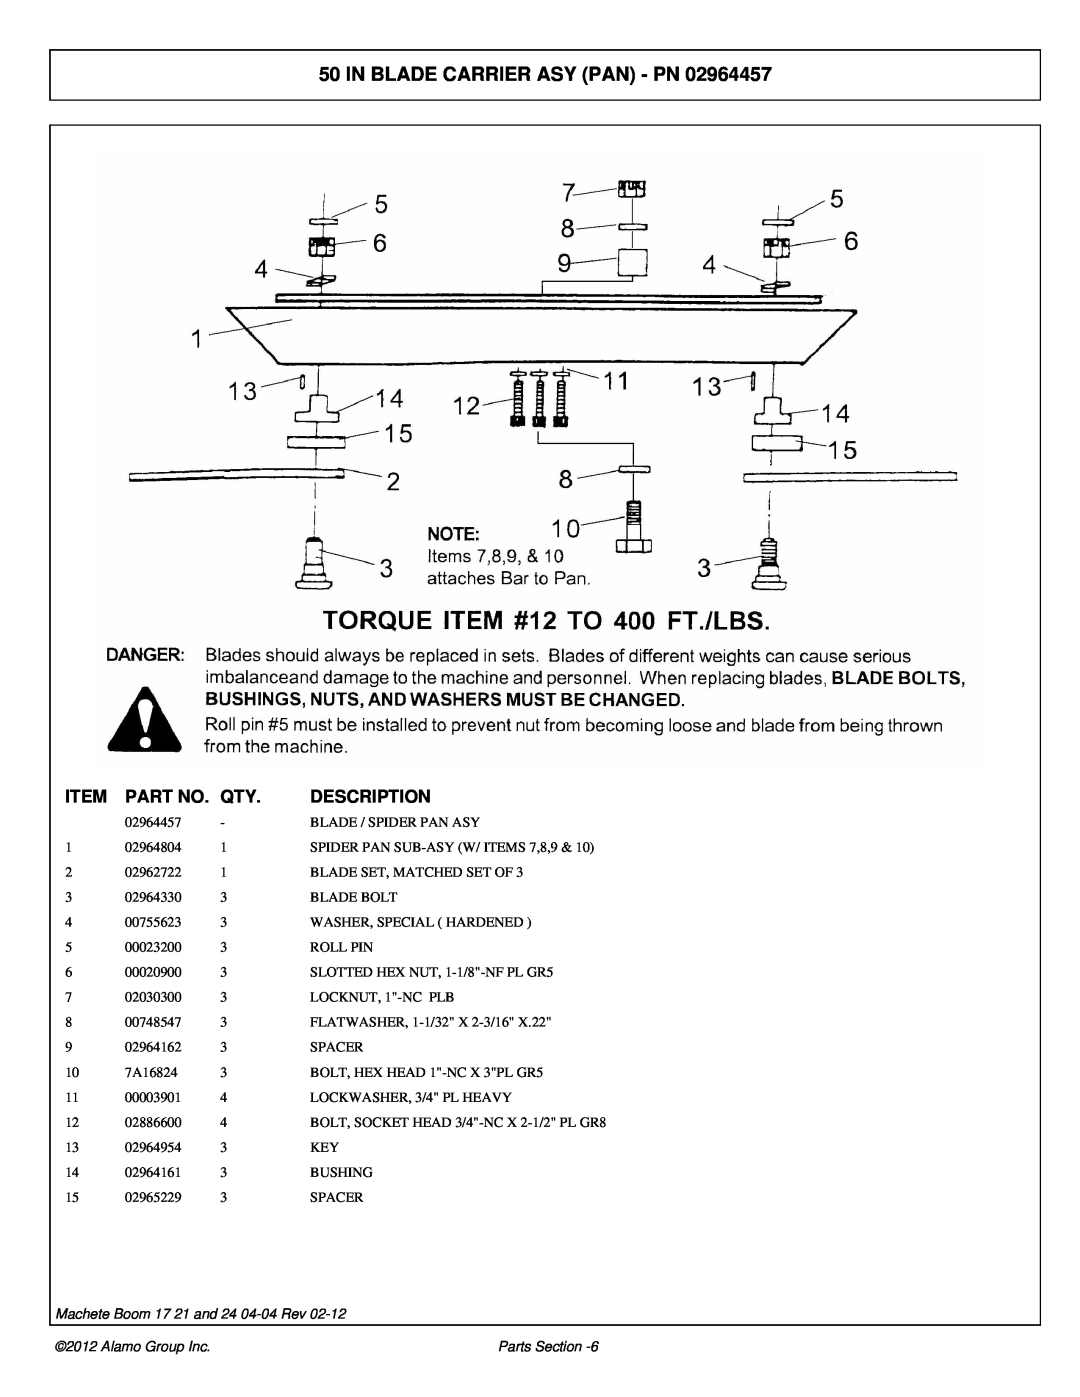 Alamo 02968915P manual In Blade Carrier Asy Pan - Pn, Item, Part No, Description, Machete Boom 17 21 and 24 04-04Rev 